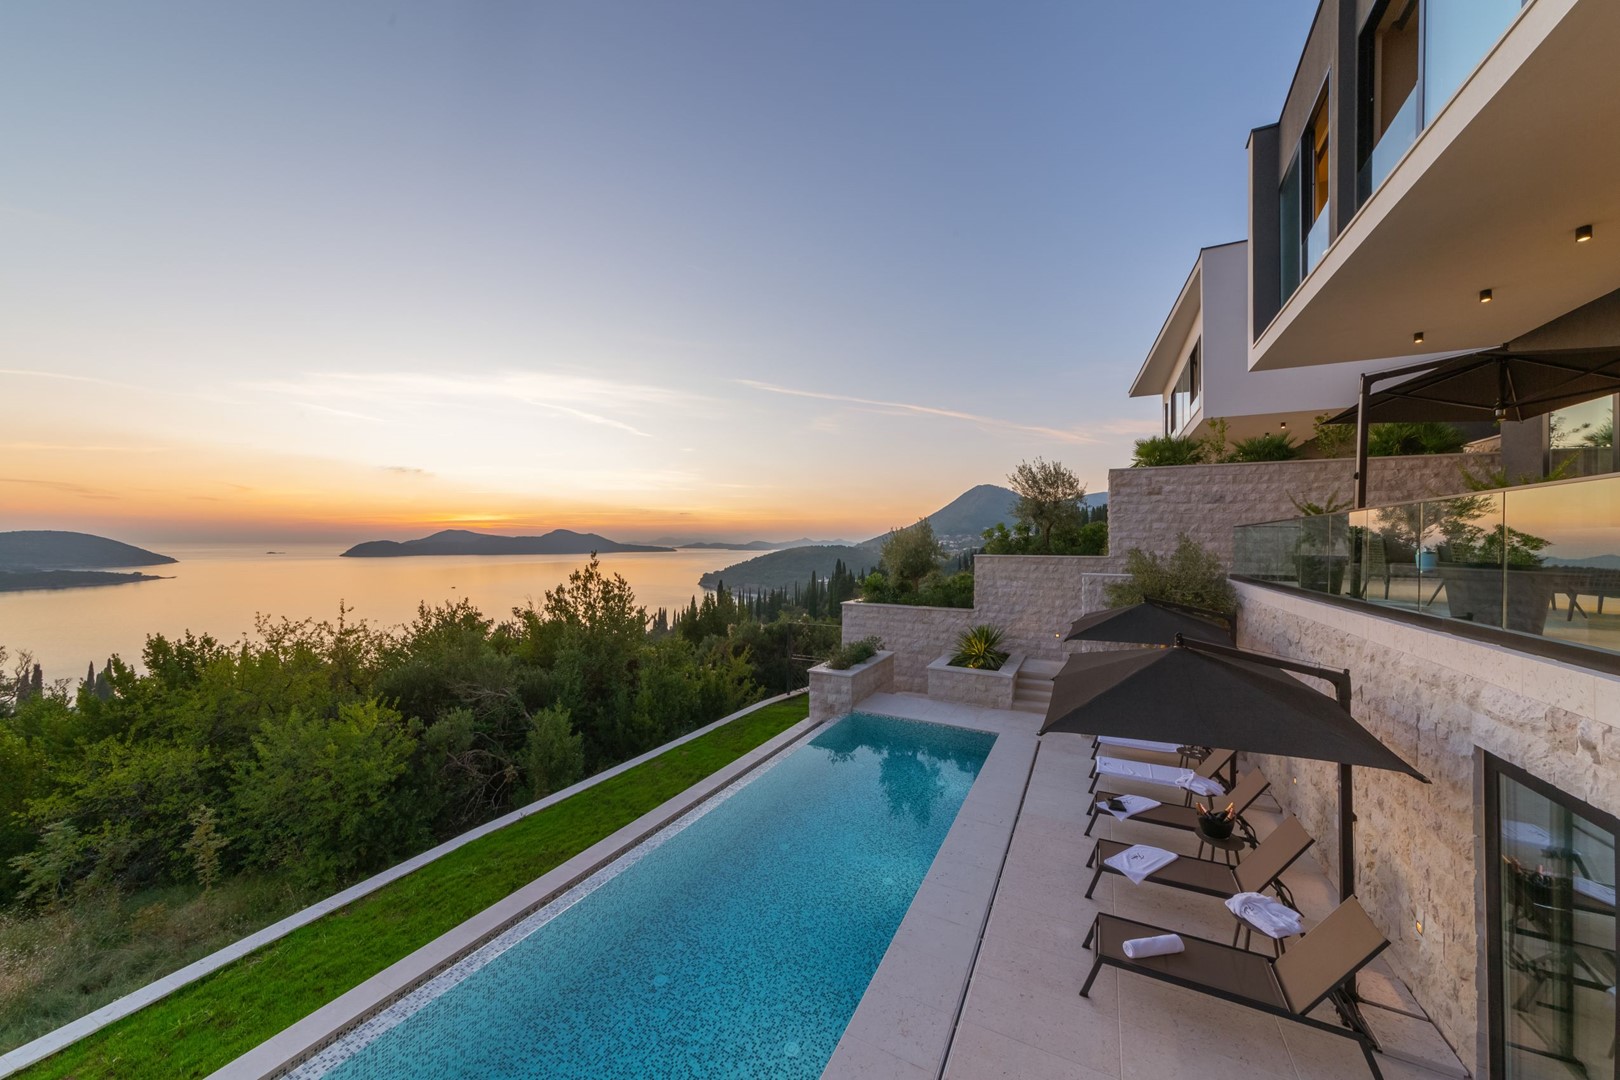 DUBROVNIK LUXURY VILLAS - Luxury Villa Dubrovnik Frida with pool, sauna and jacuzzi in Dubrovnik - Orasac